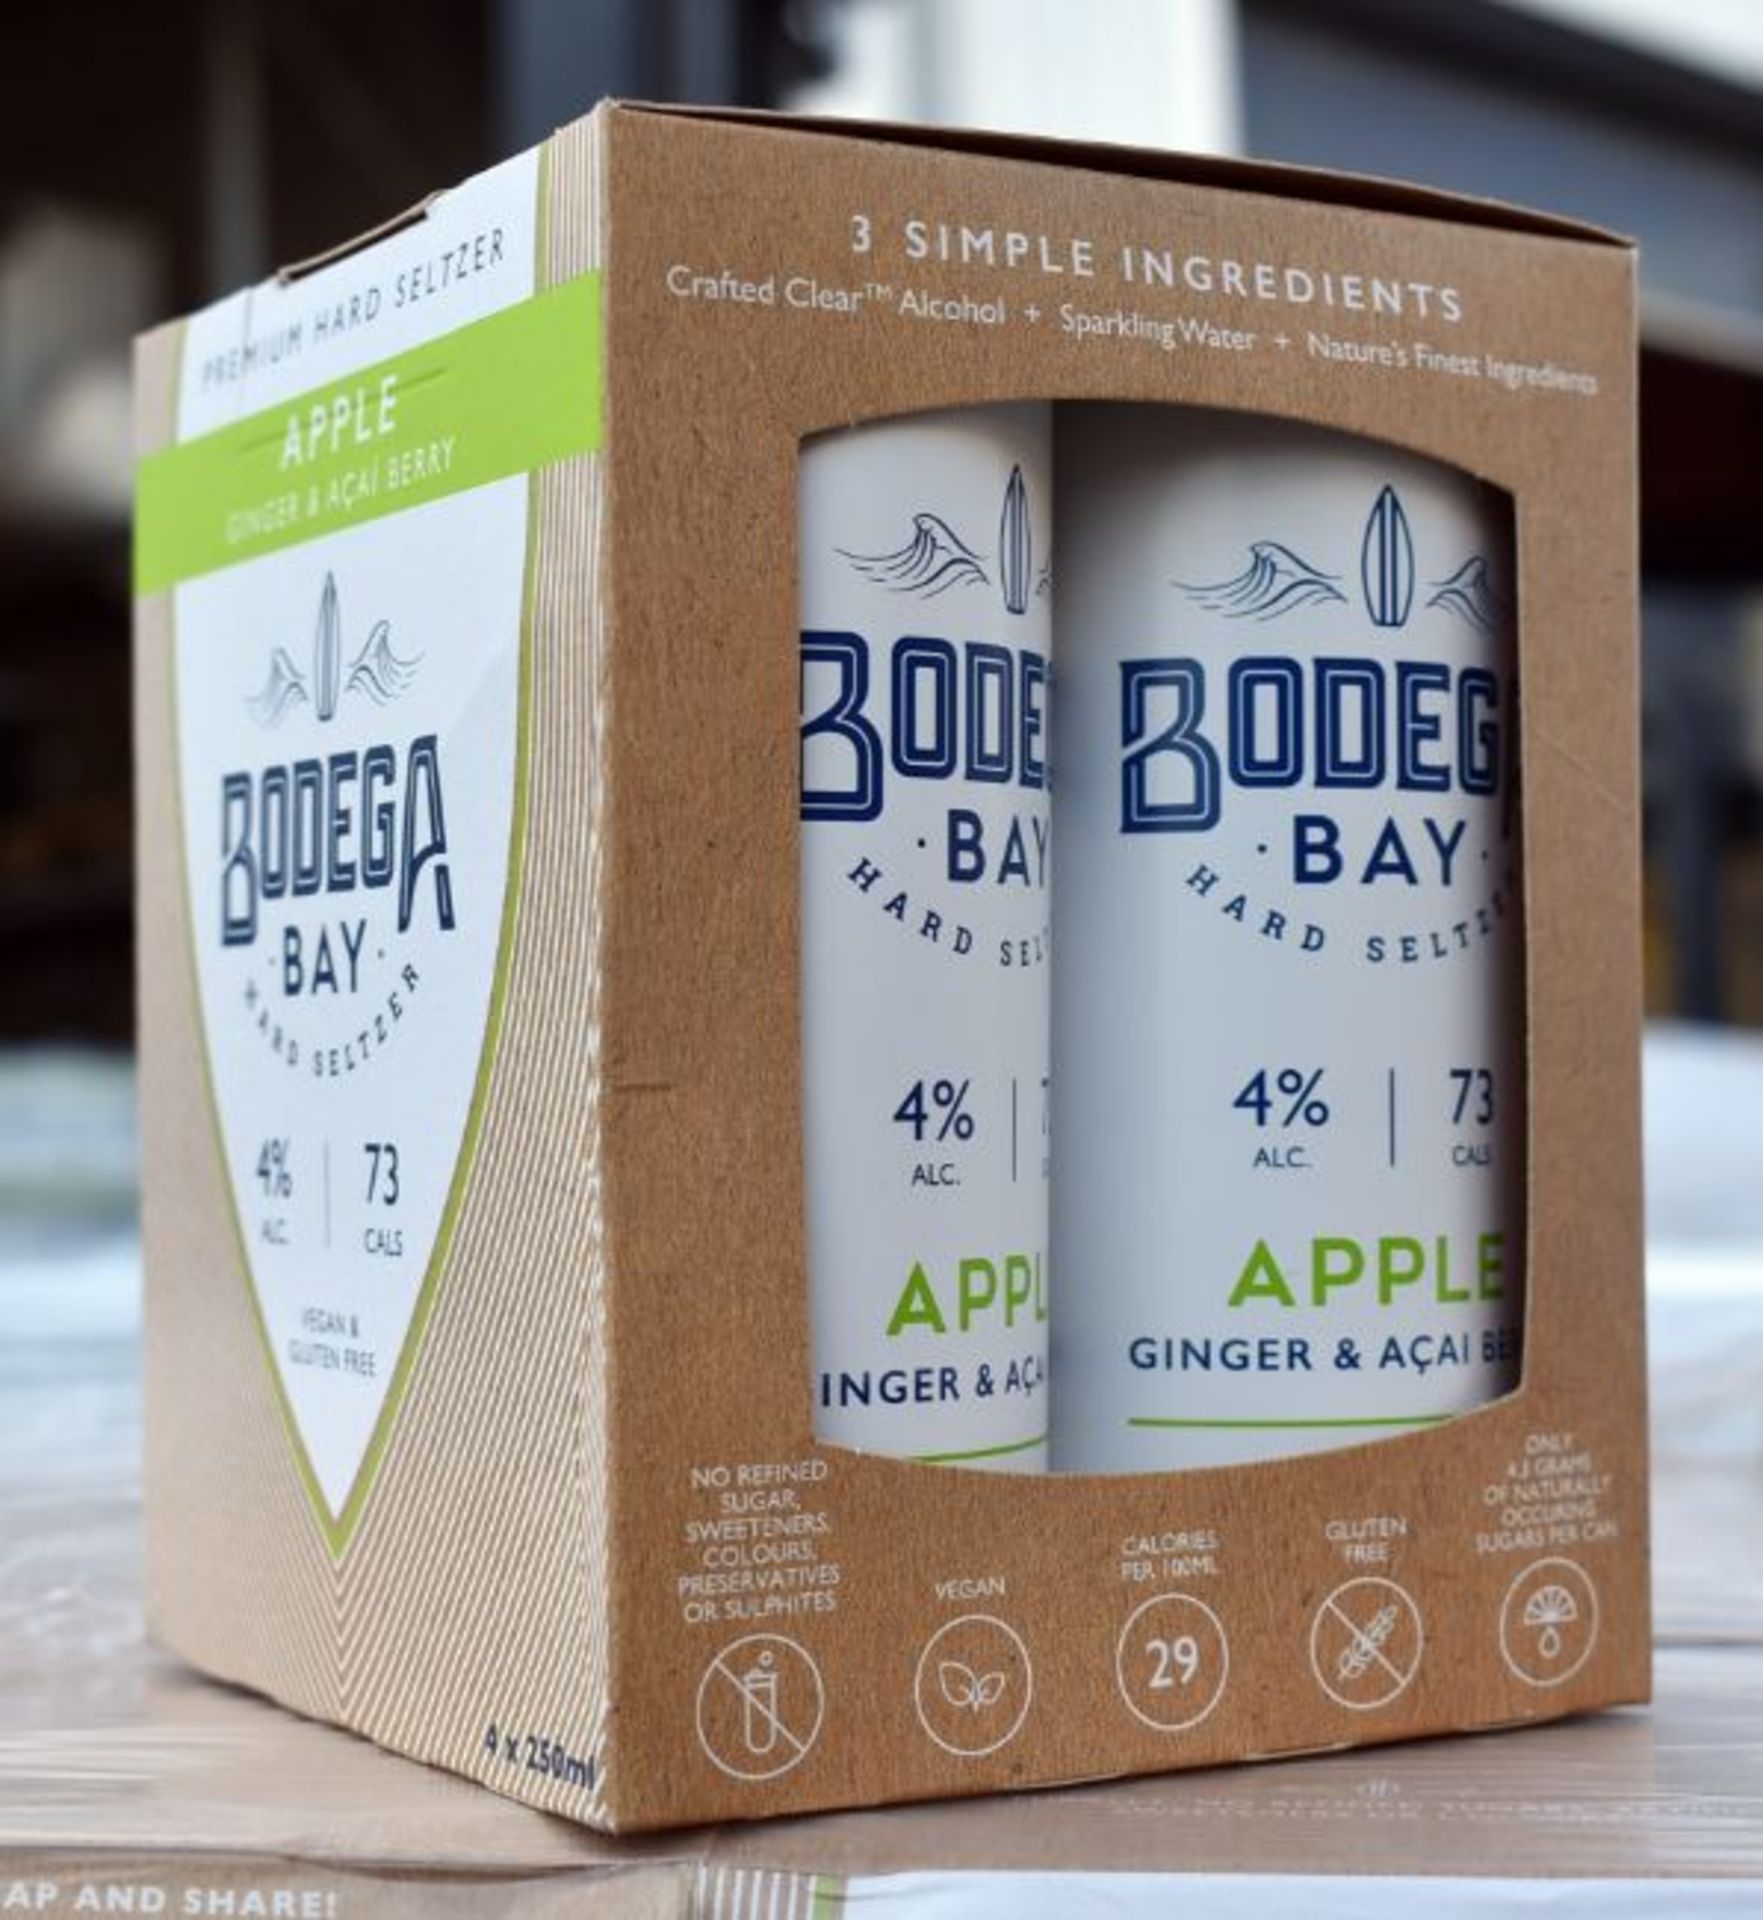 24 x Bodega Bay Hard Seltzer 250ml Alcoholic Sparkling Water Drinks - Apple Ginger & Acai Berry - Image 9 of 9